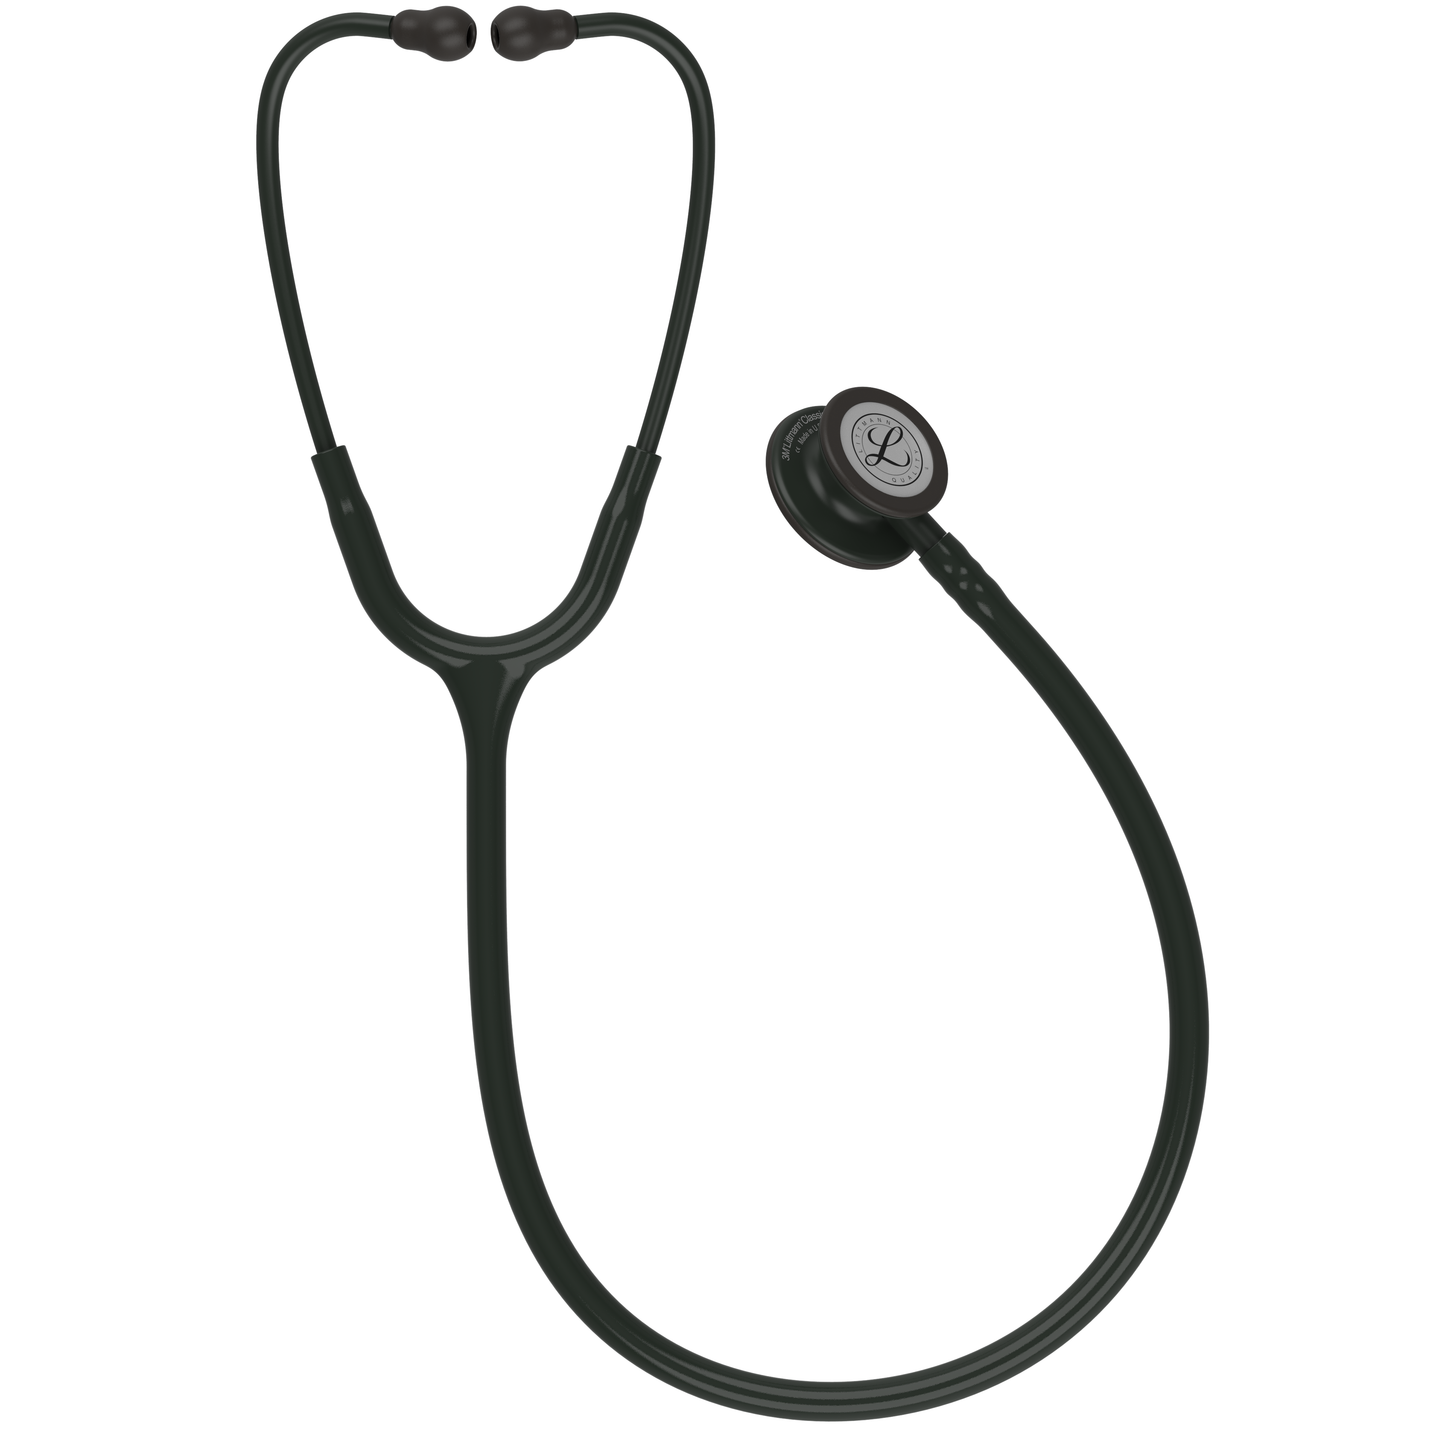 Littmann Classic III Monitoring Stethoscope: All Black 5803